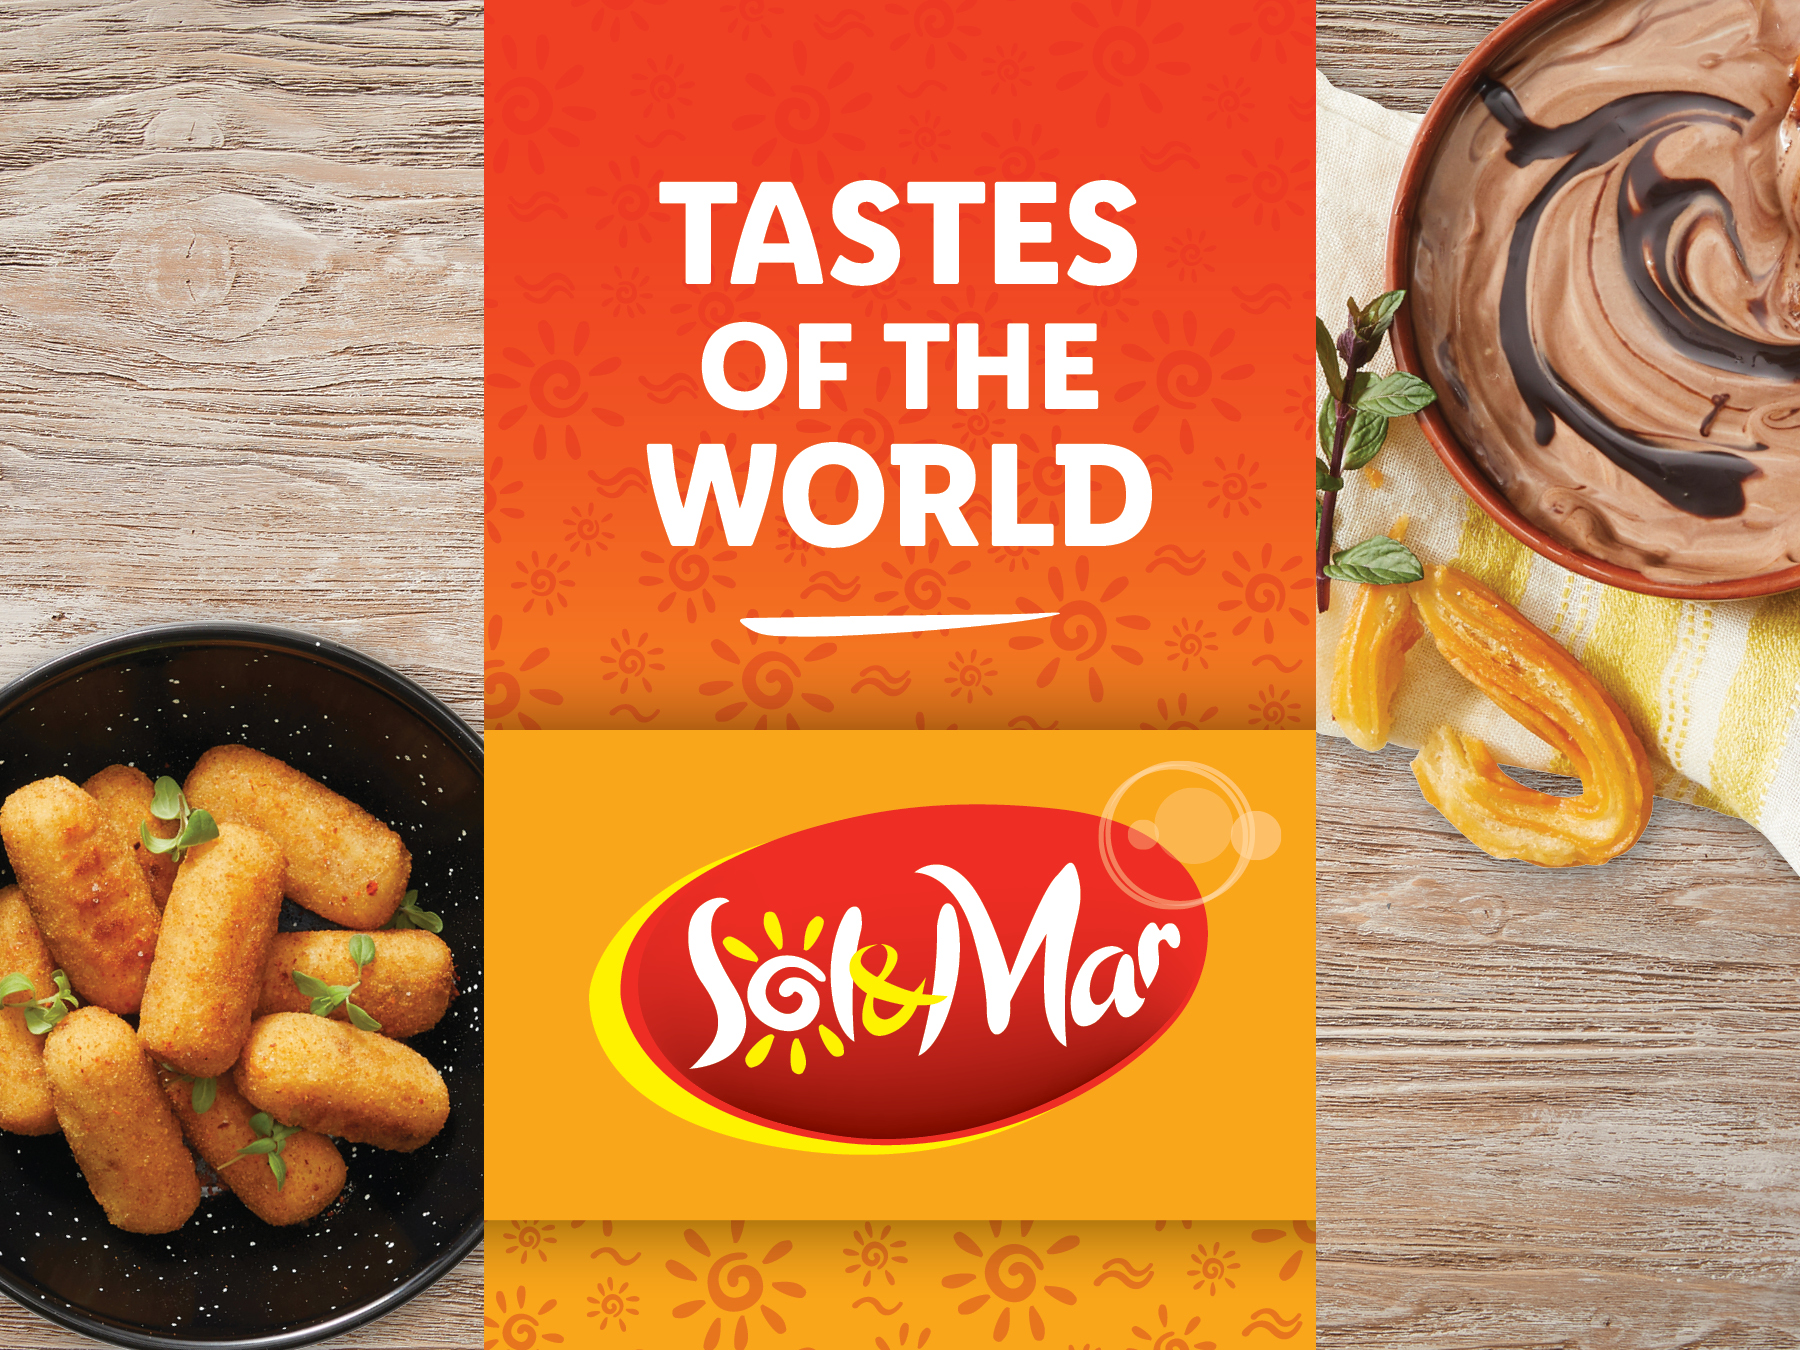 Sol & Mar - Tastes of the World